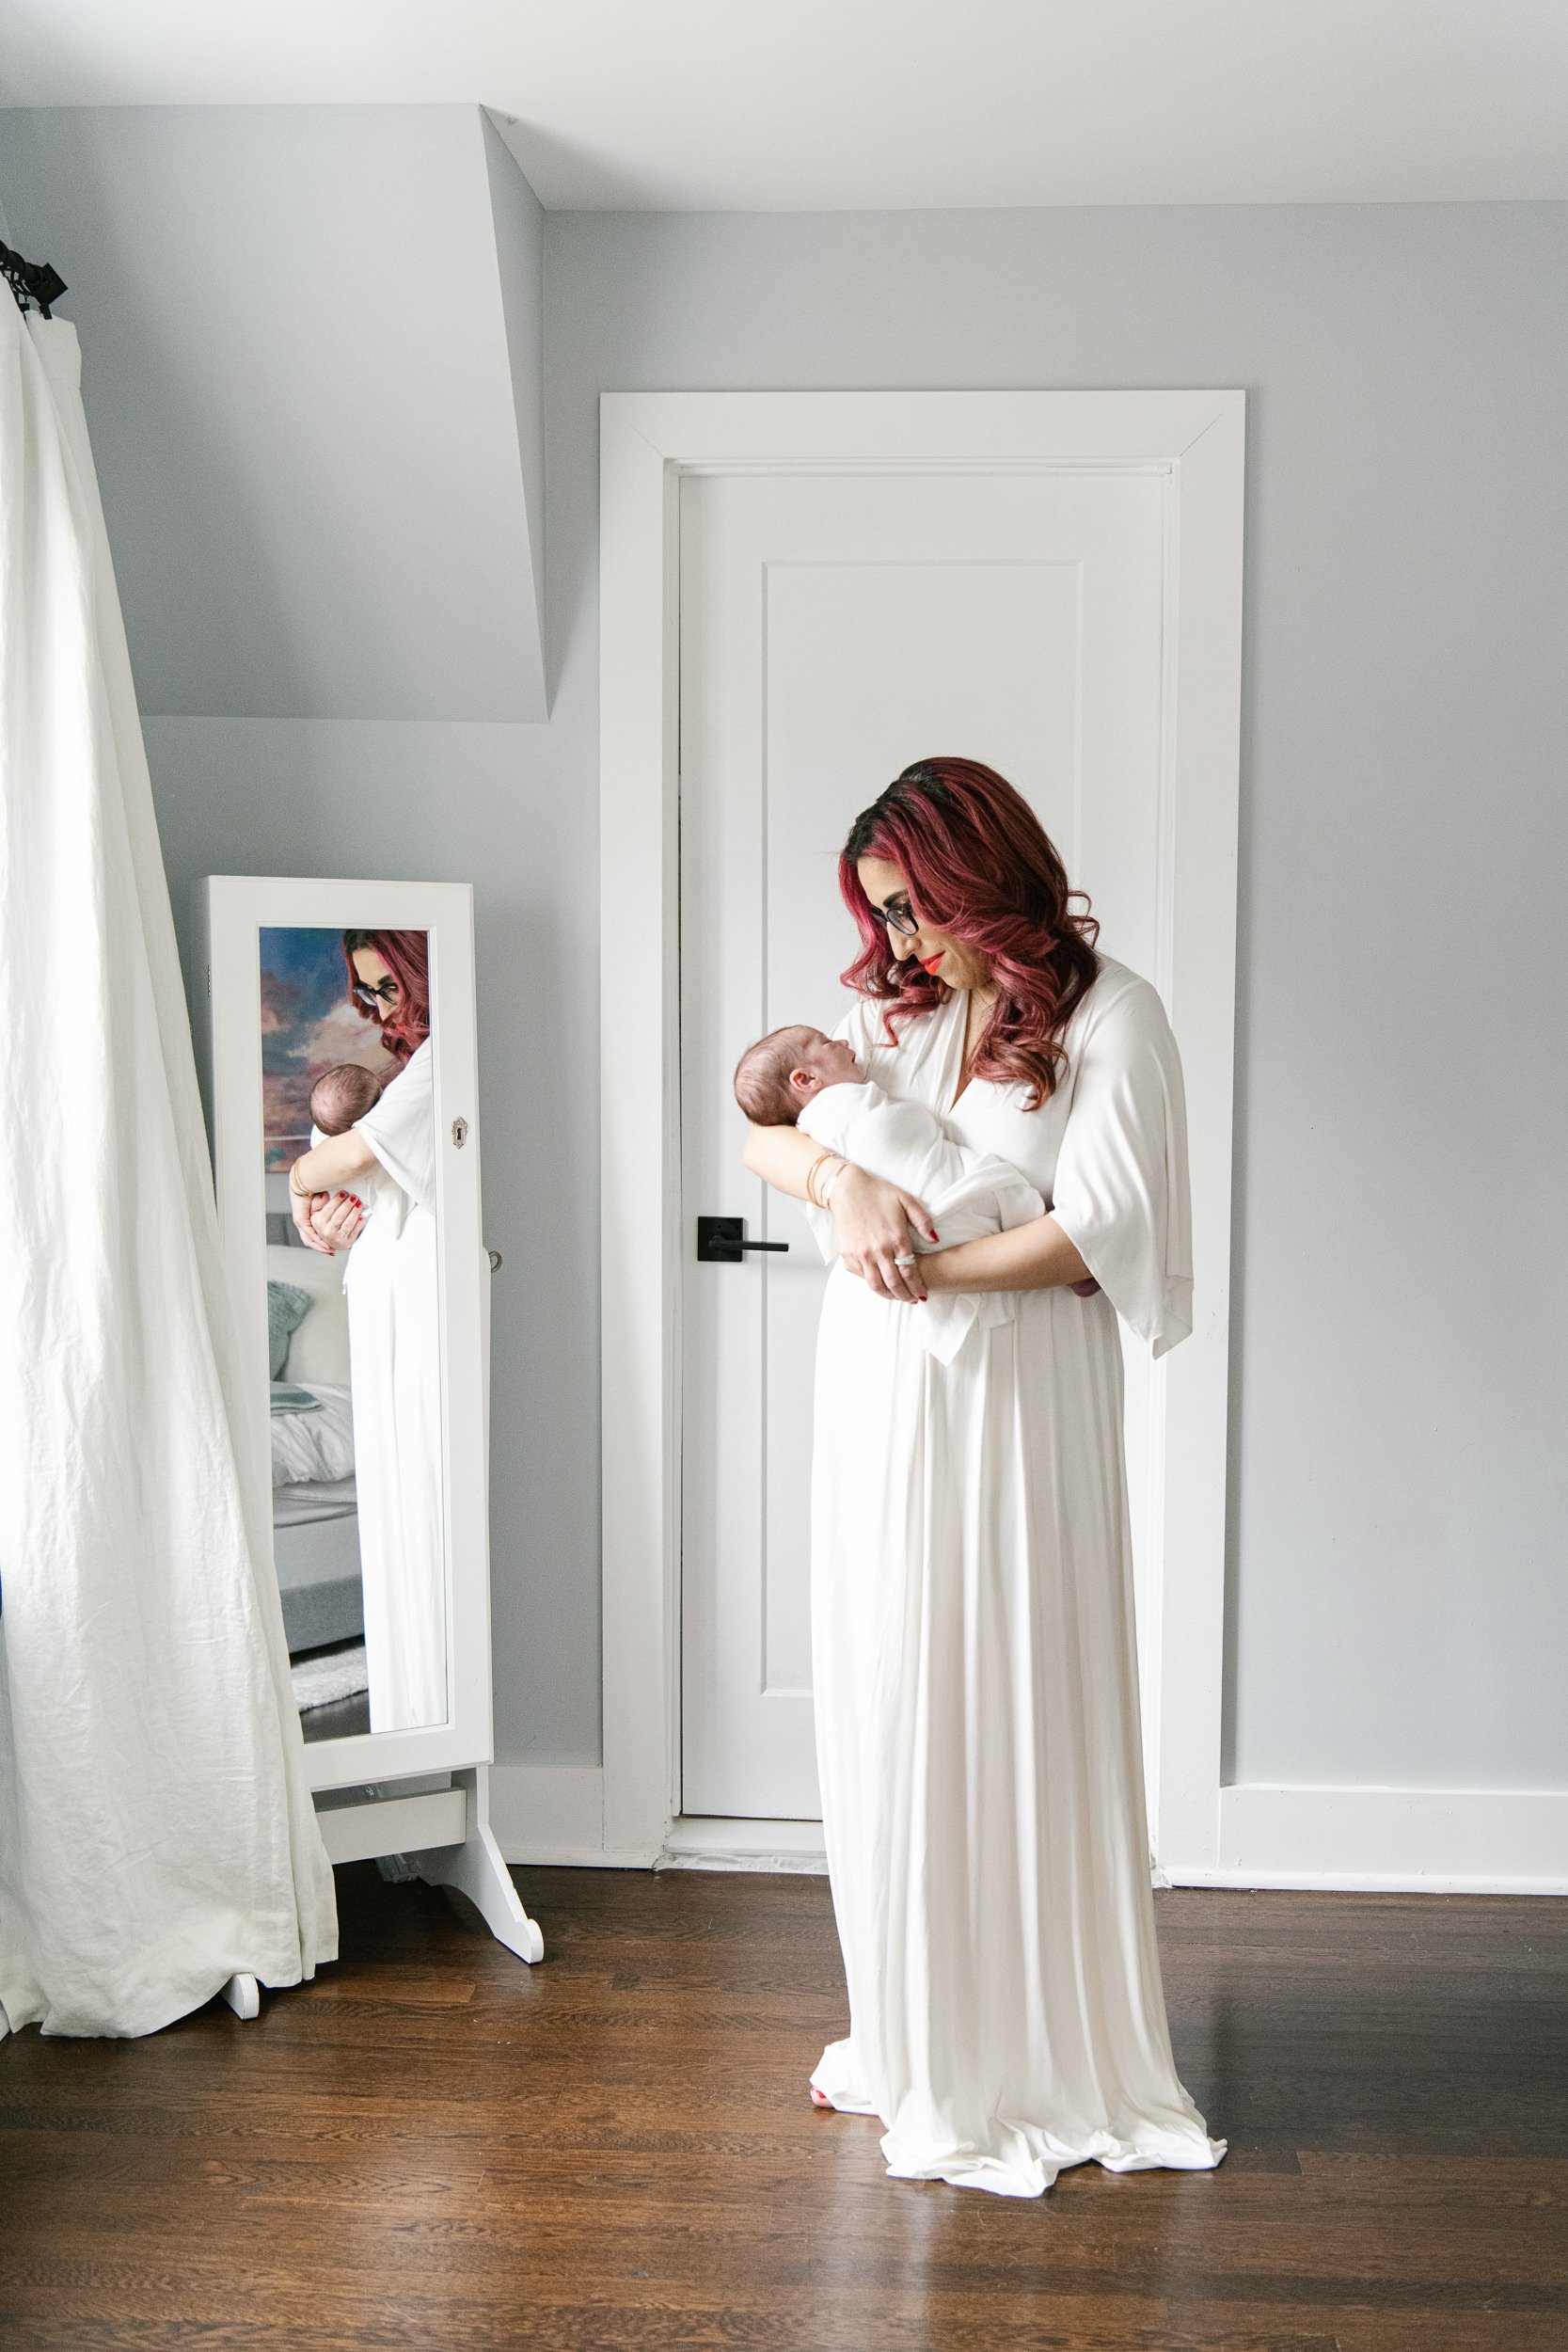  New Jersey newborn photographer Nicole Hawkins Photography captures a mother holding a baby in the mirror. mirror motherhood shots #nicolehawkinsphotography #NJfamilyphotographer #inhomenewbornsession #nicolehawkinsnewborns #NJnewbornphotography 